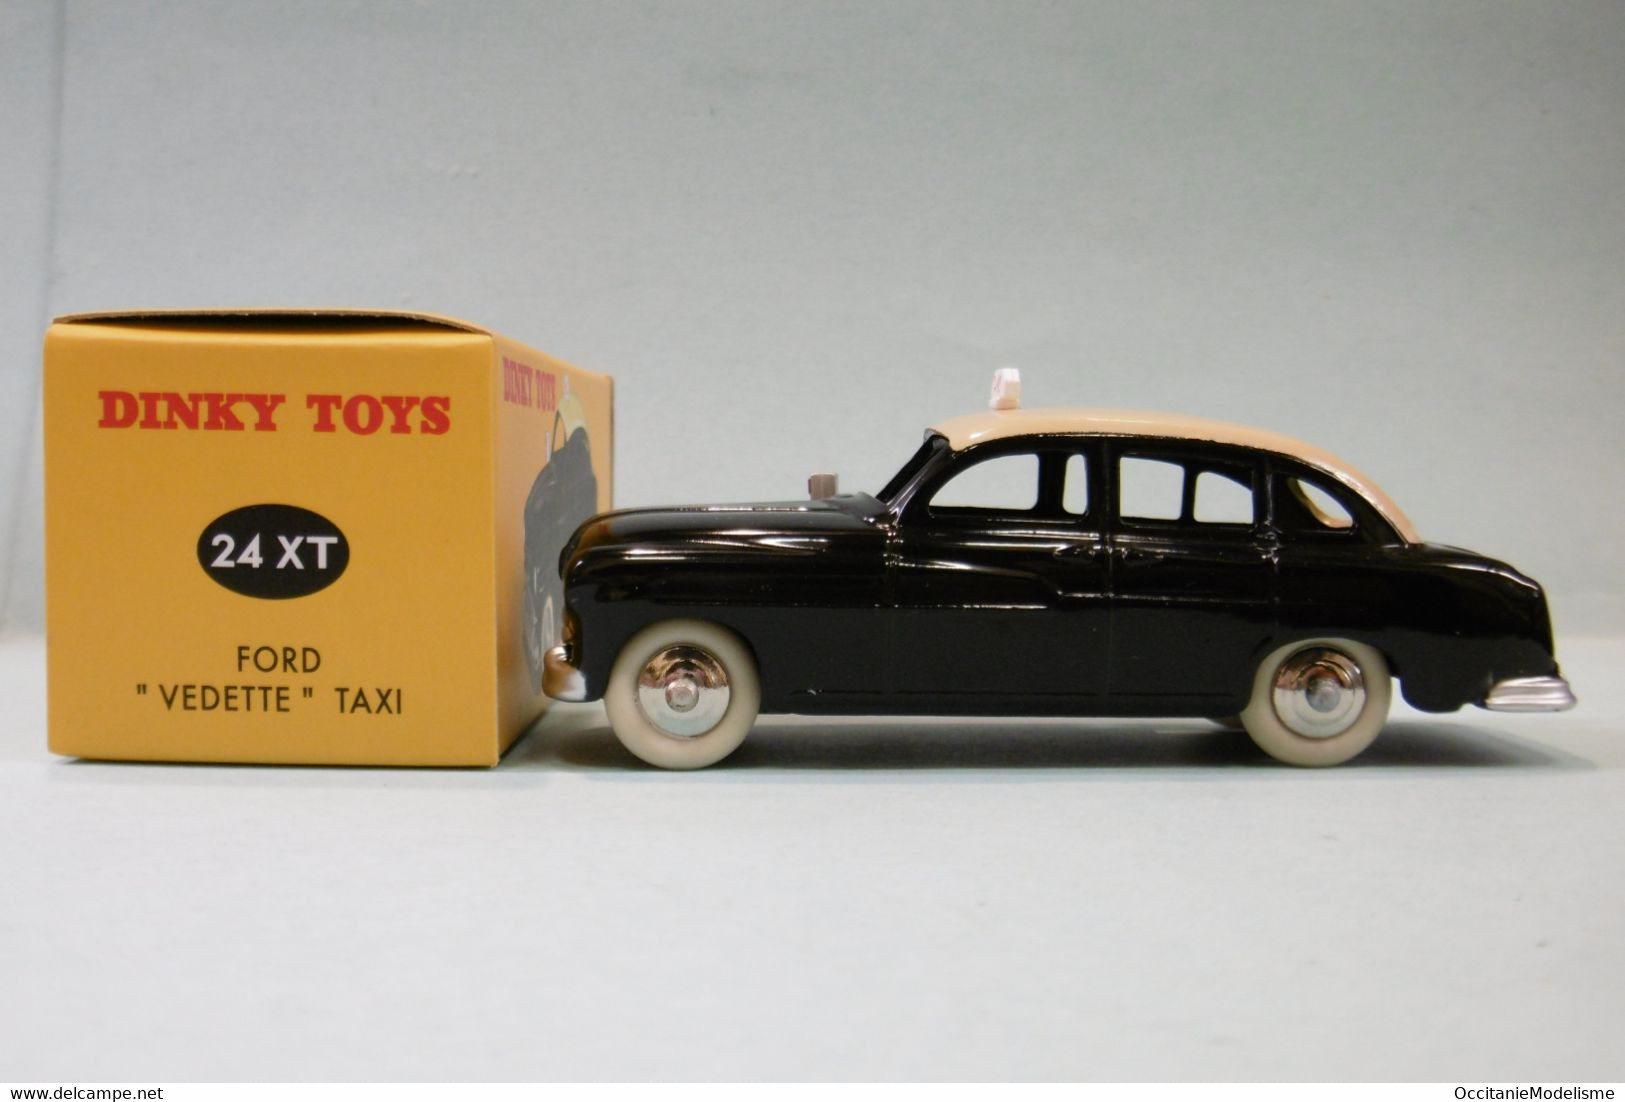 Dinky Toys / Atlas - COFFRET LES TAXIS DE POISSY Simca Aronde Ford Vedette réf. 24 UXT Neuf NBO 1/43